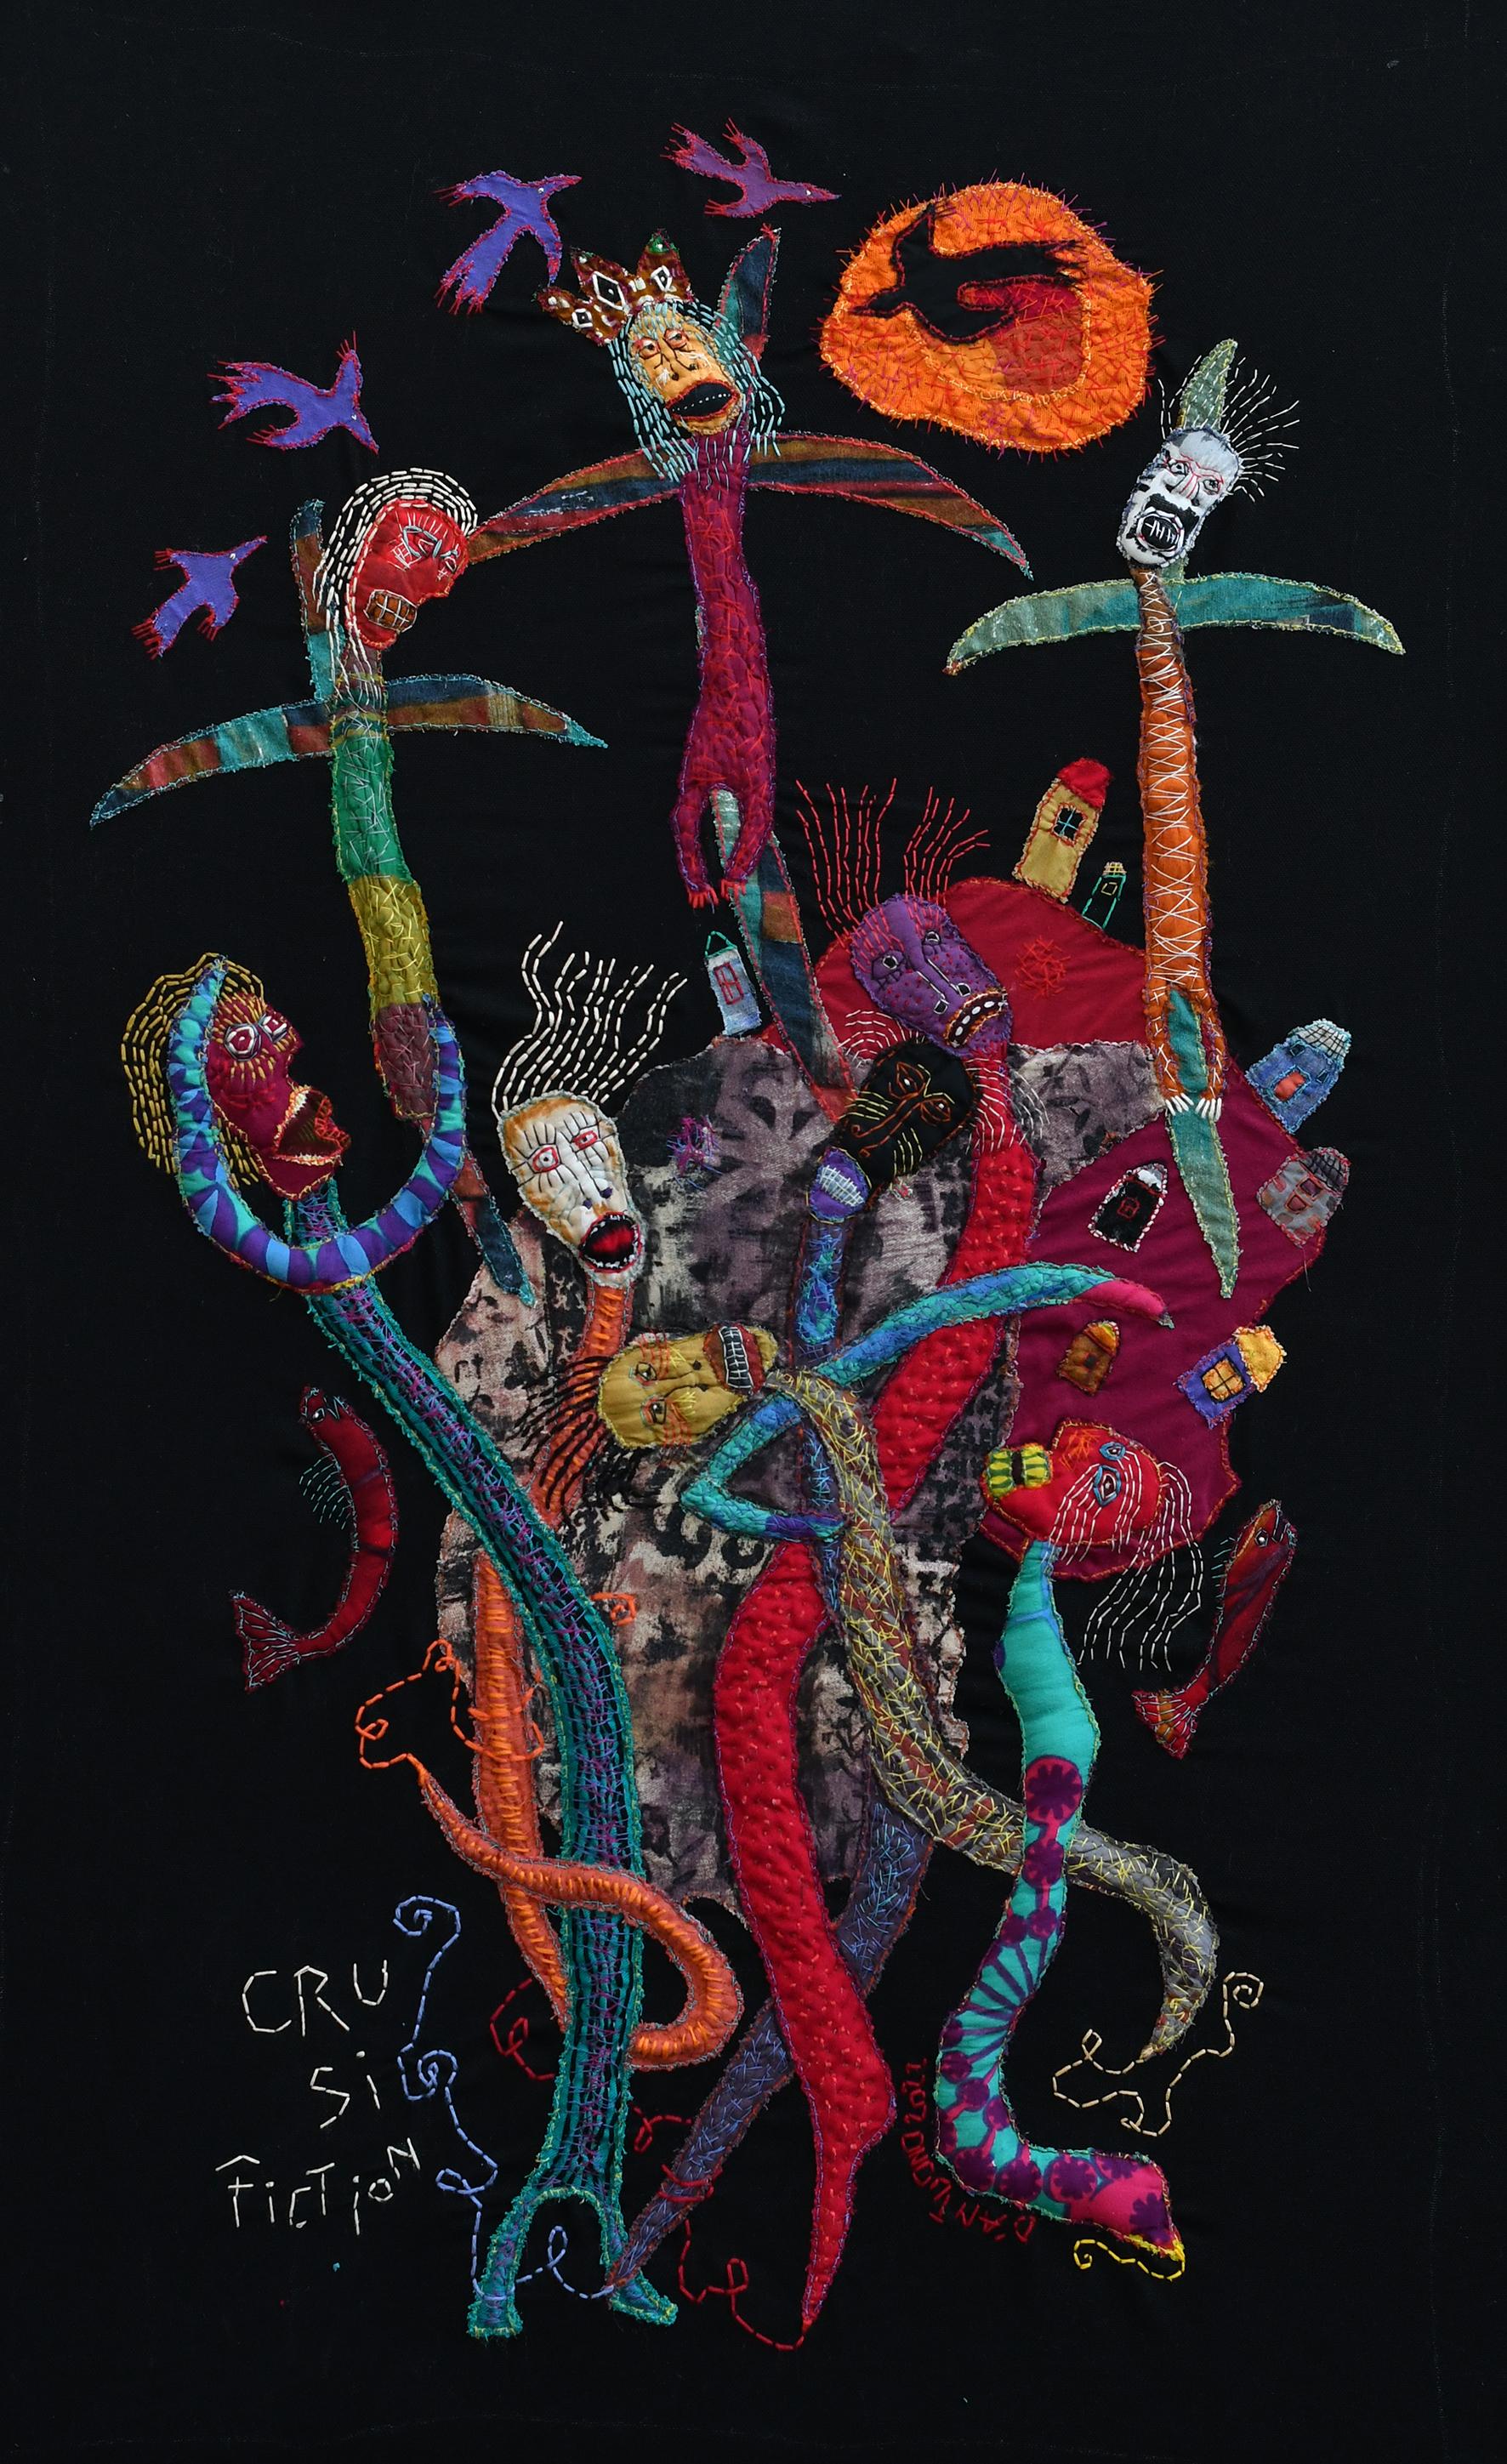 Cru si fiction Barbara d'Antuono 21st Century Contemporary outsider textile art